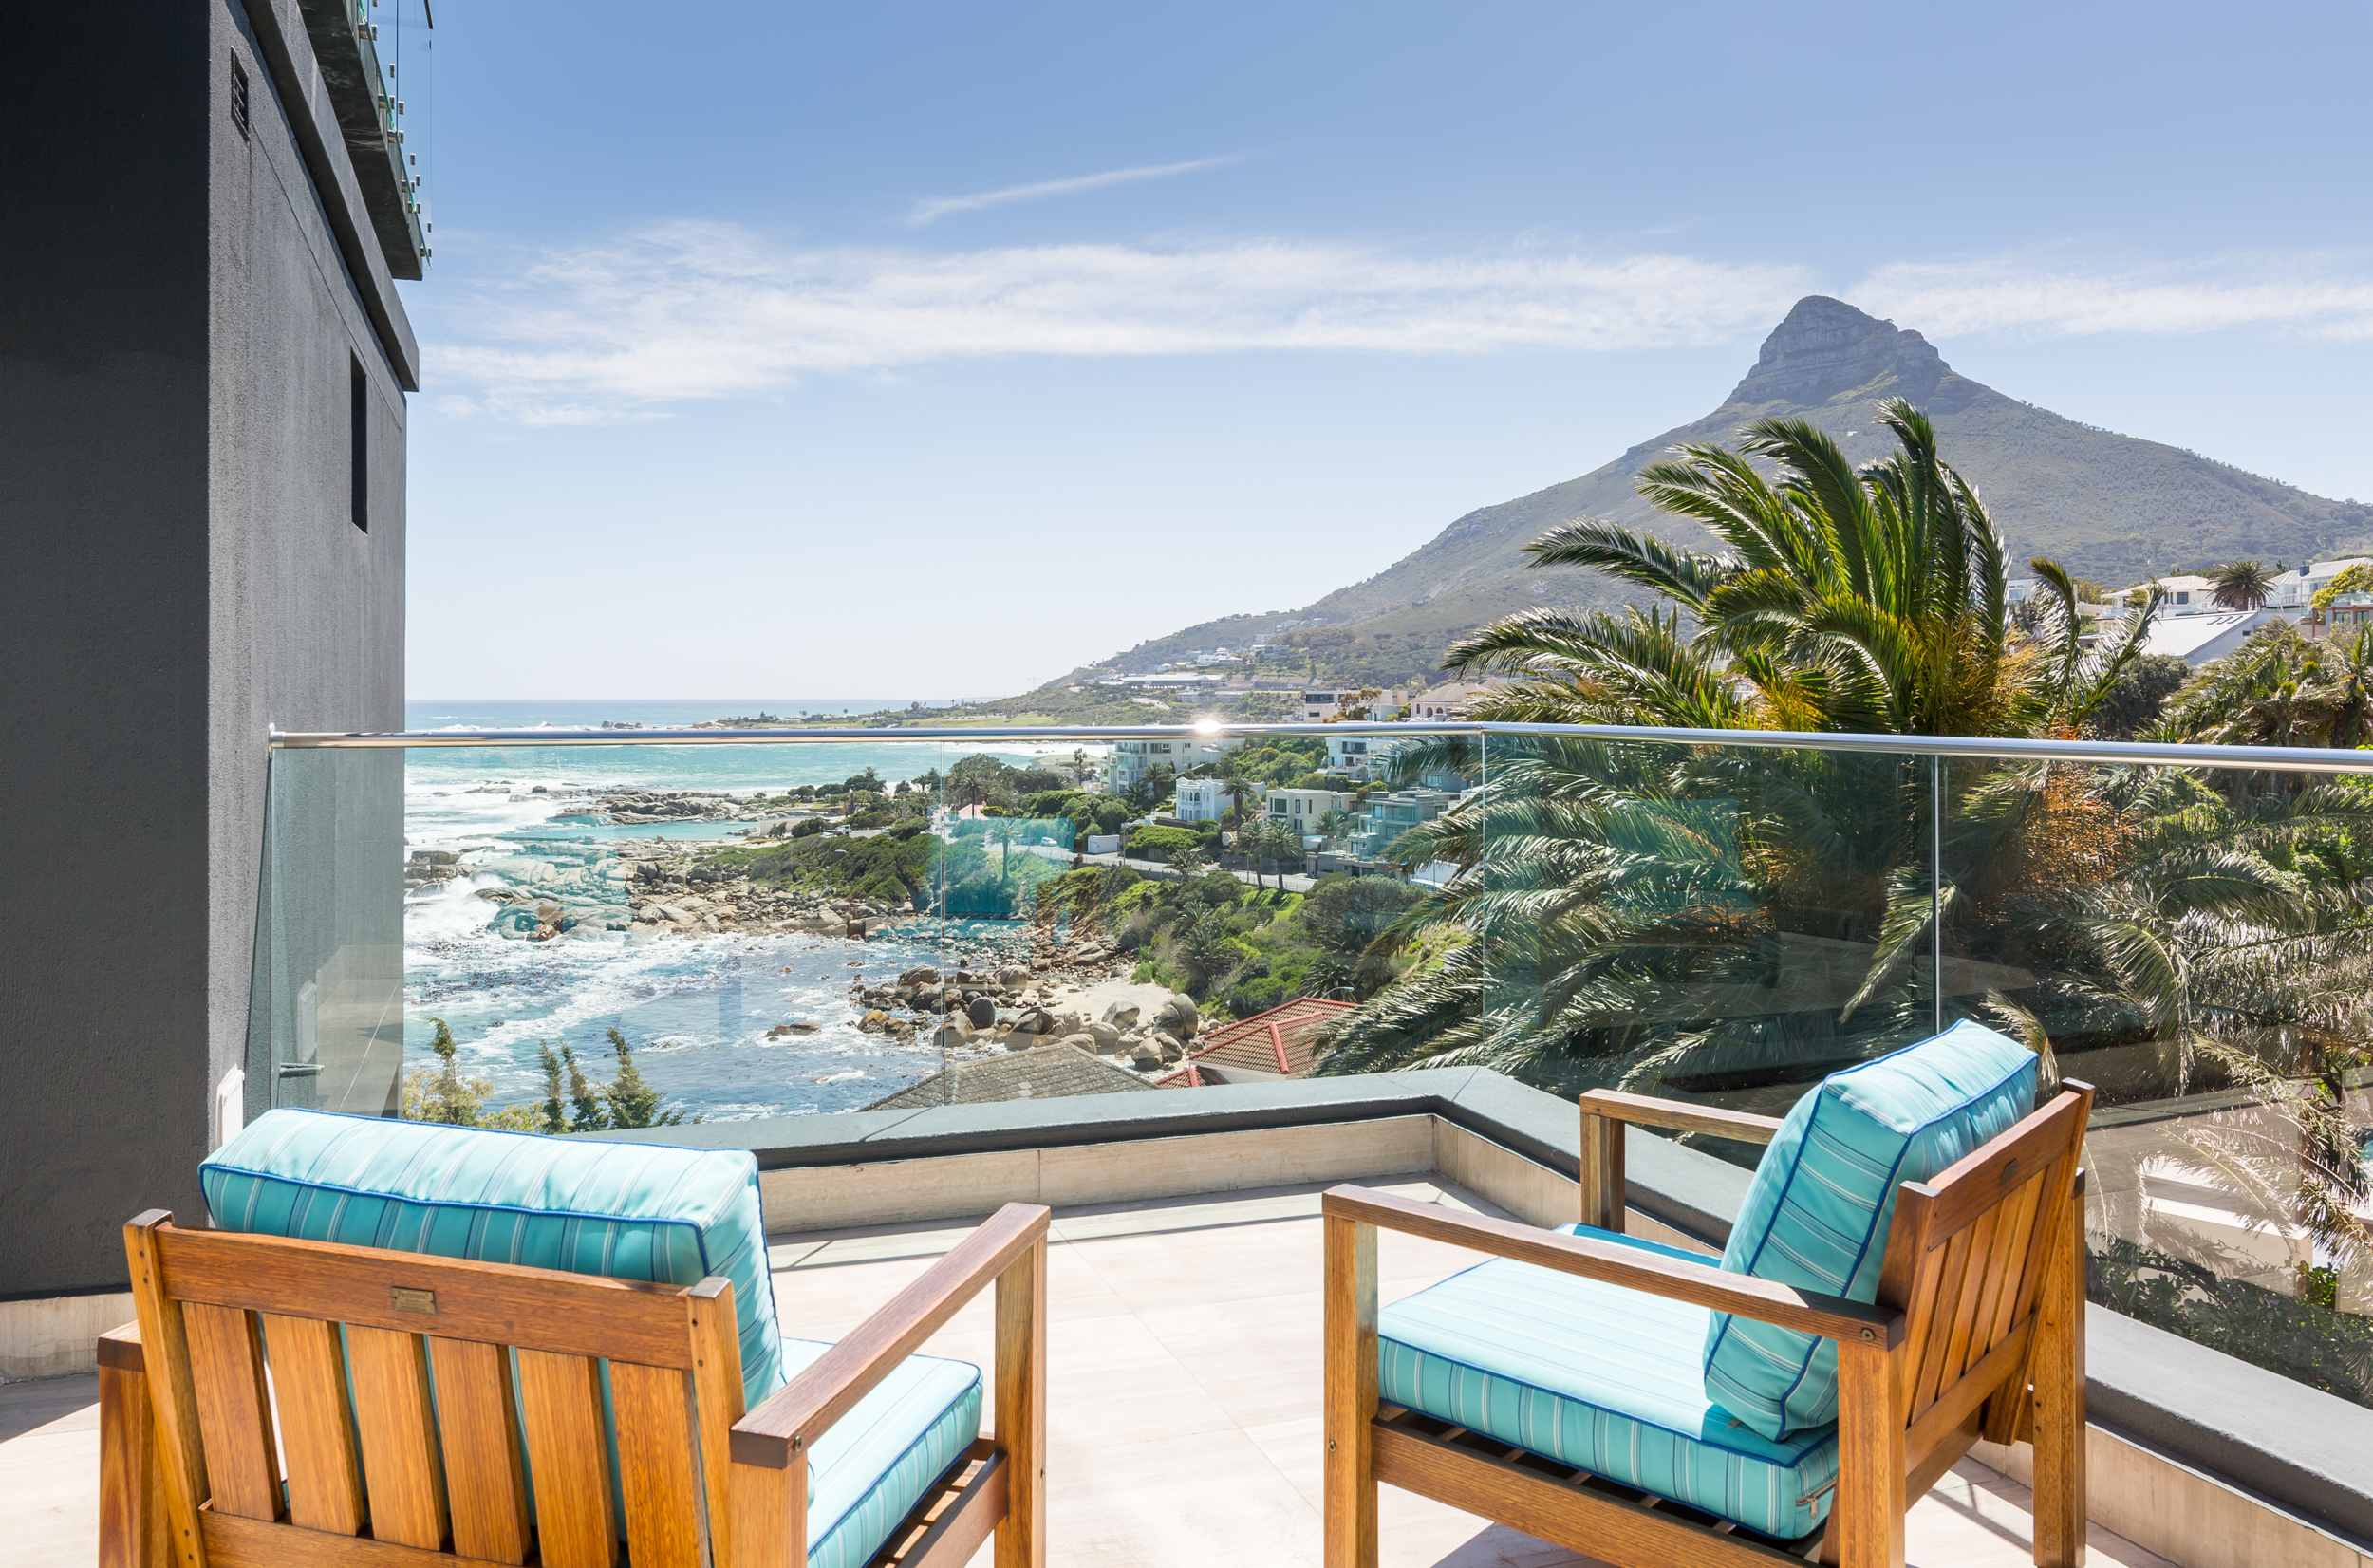 Living Hotels eröffnet Guesthouse in Kapstadt, Südafrika